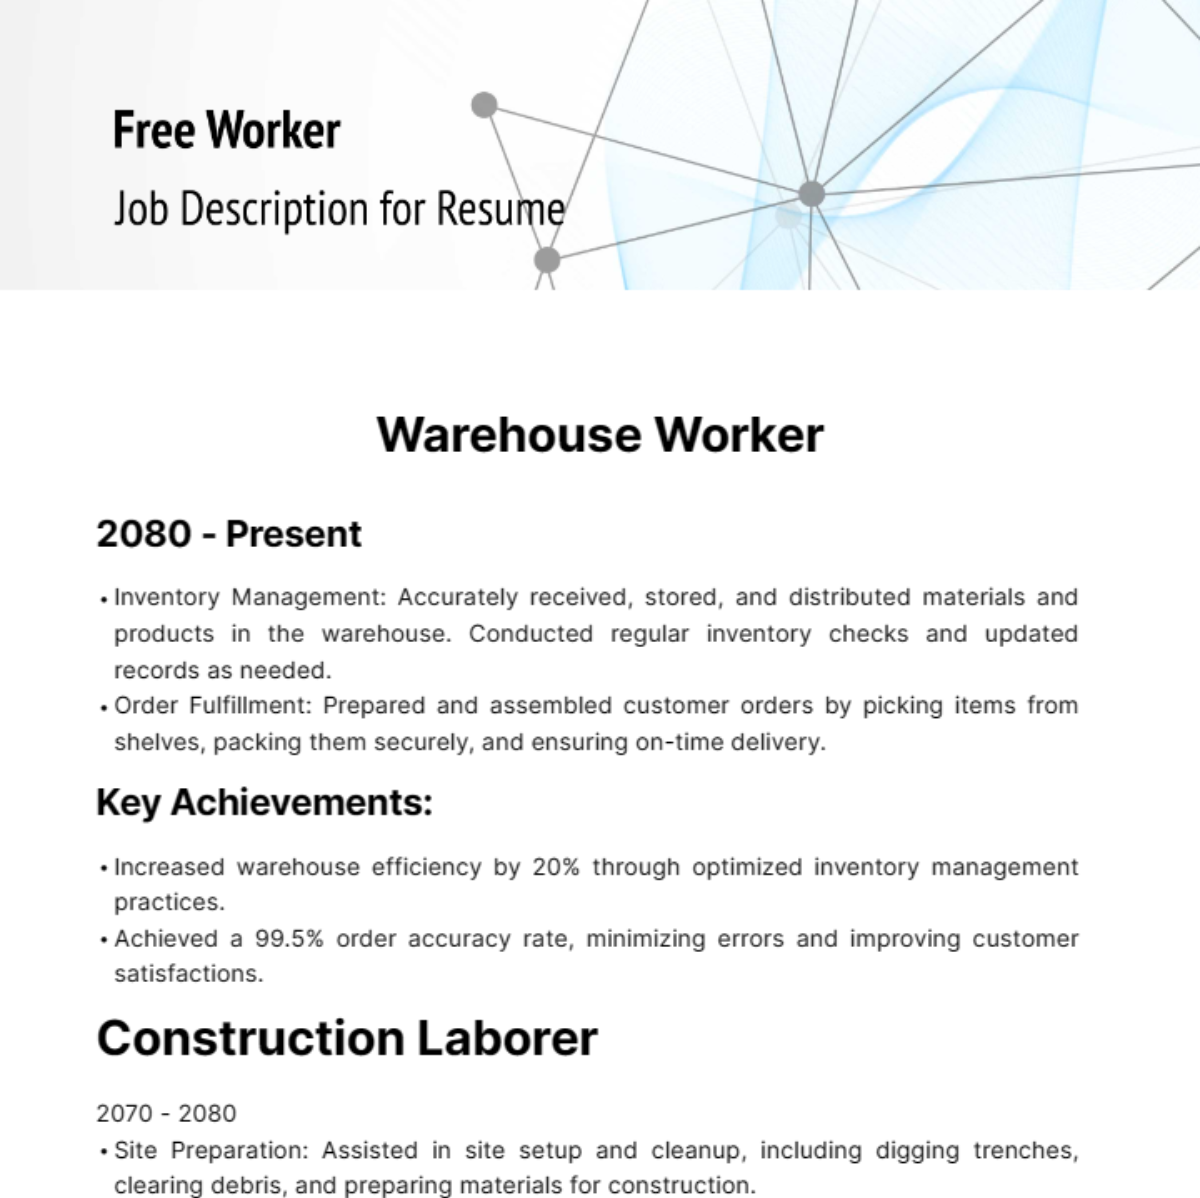 Free Worker Job Description for Resume Template